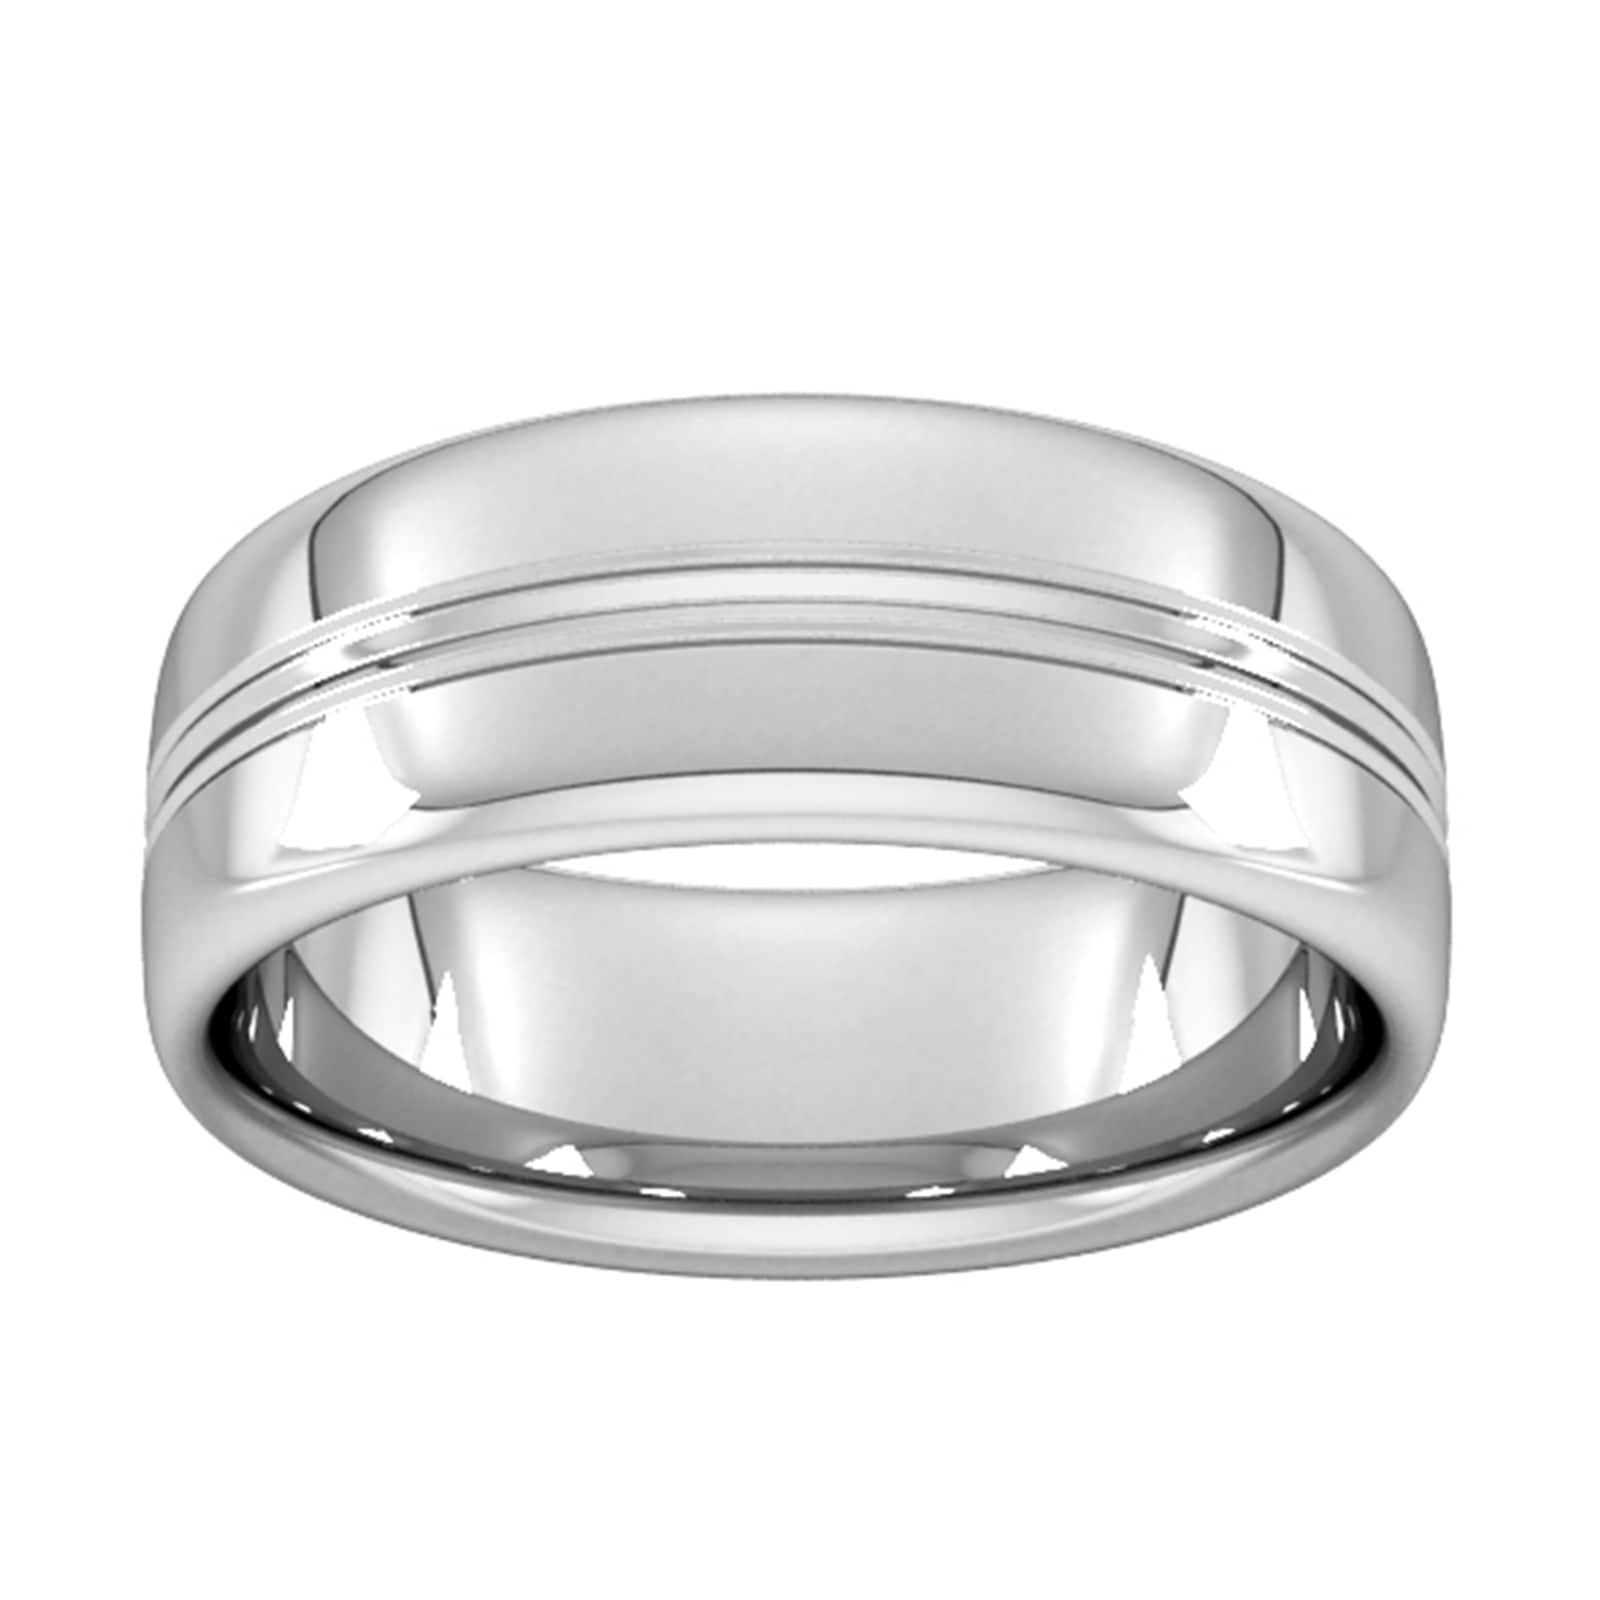 8mm Slight Court Standard Grooved Polished Finish Wedding Ring In 950 Palladium - Ring Size J